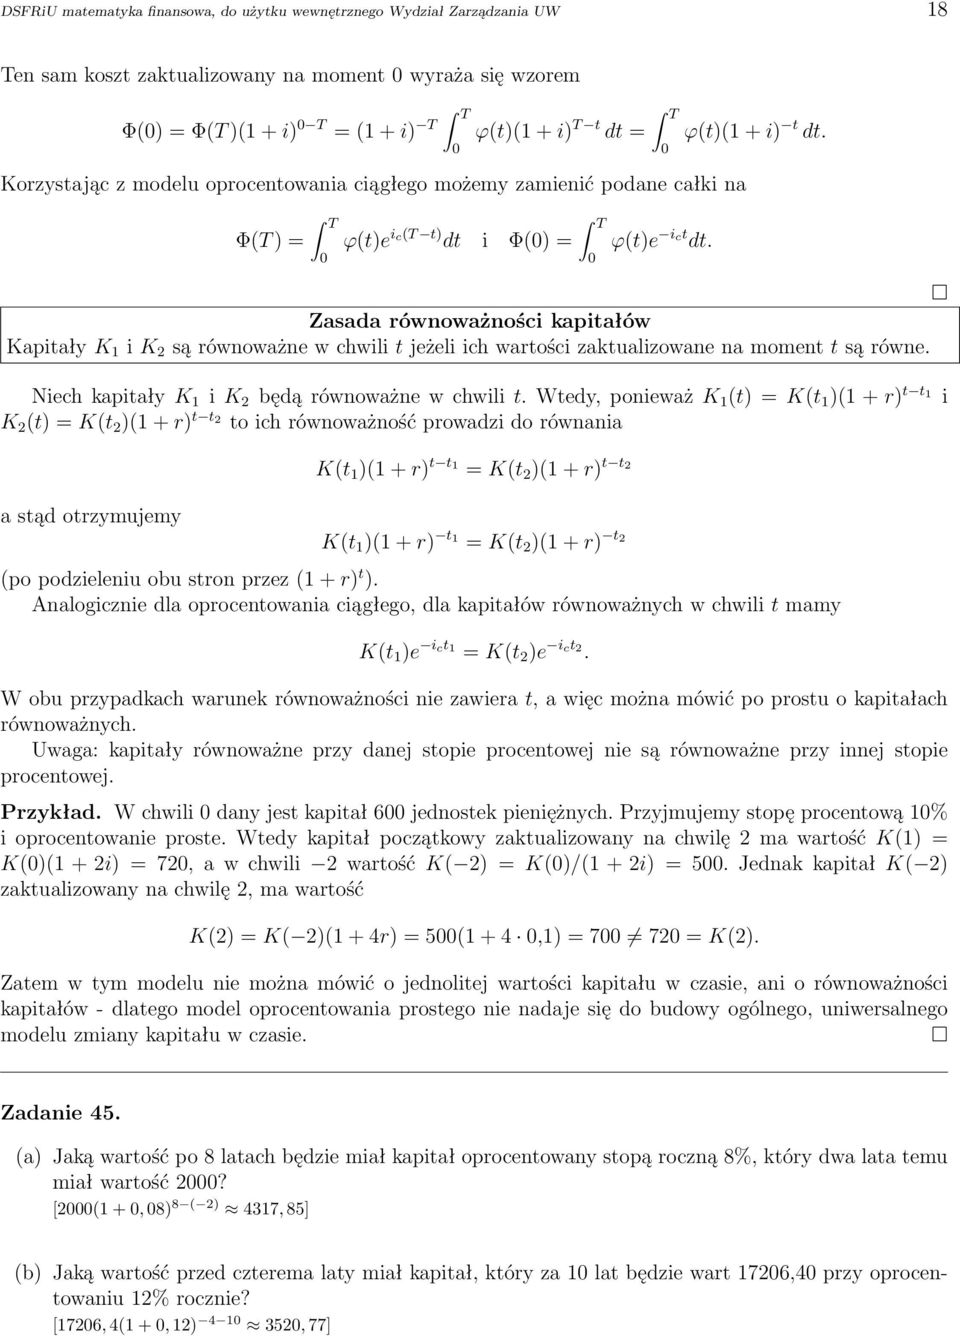 Matematyka finansowa DSFRiU - PDF Free Download